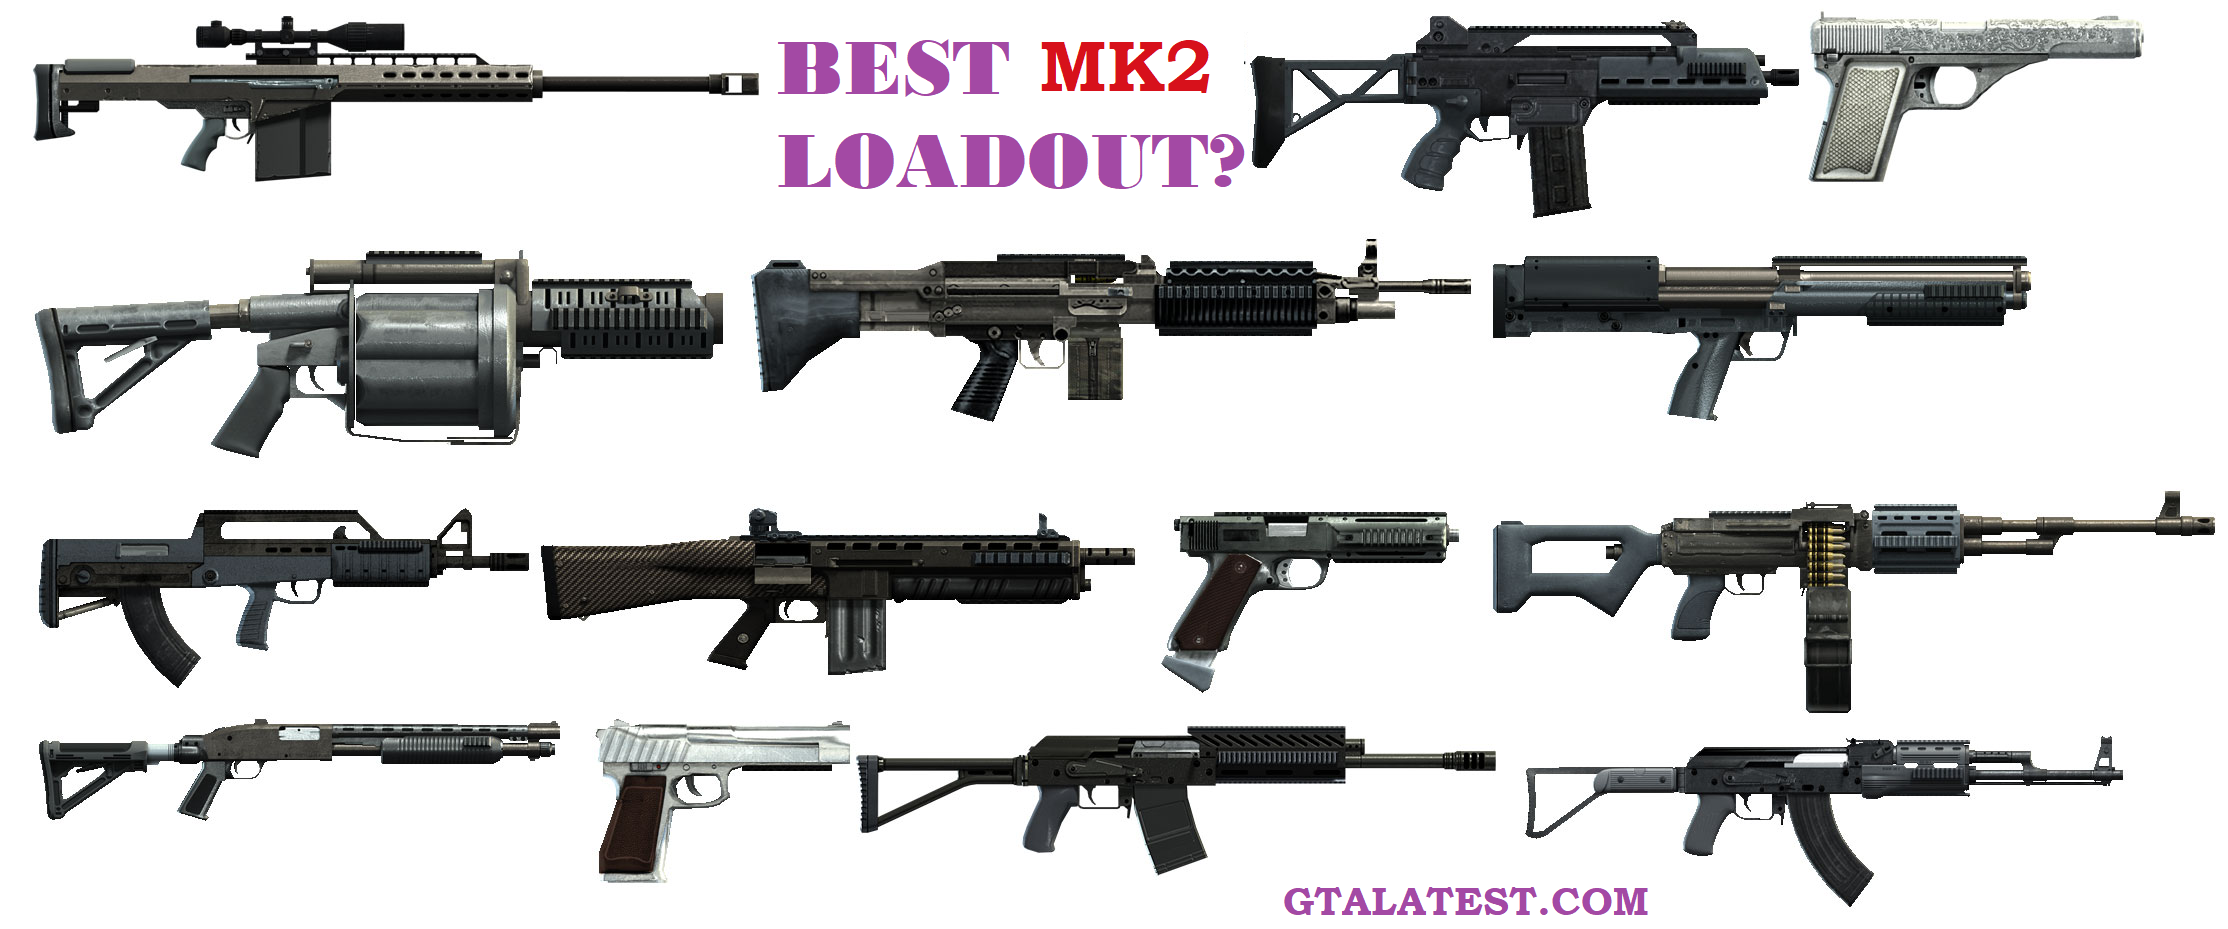 Gta online gunrunning mk 2 weapons upgrade list - dlfaher